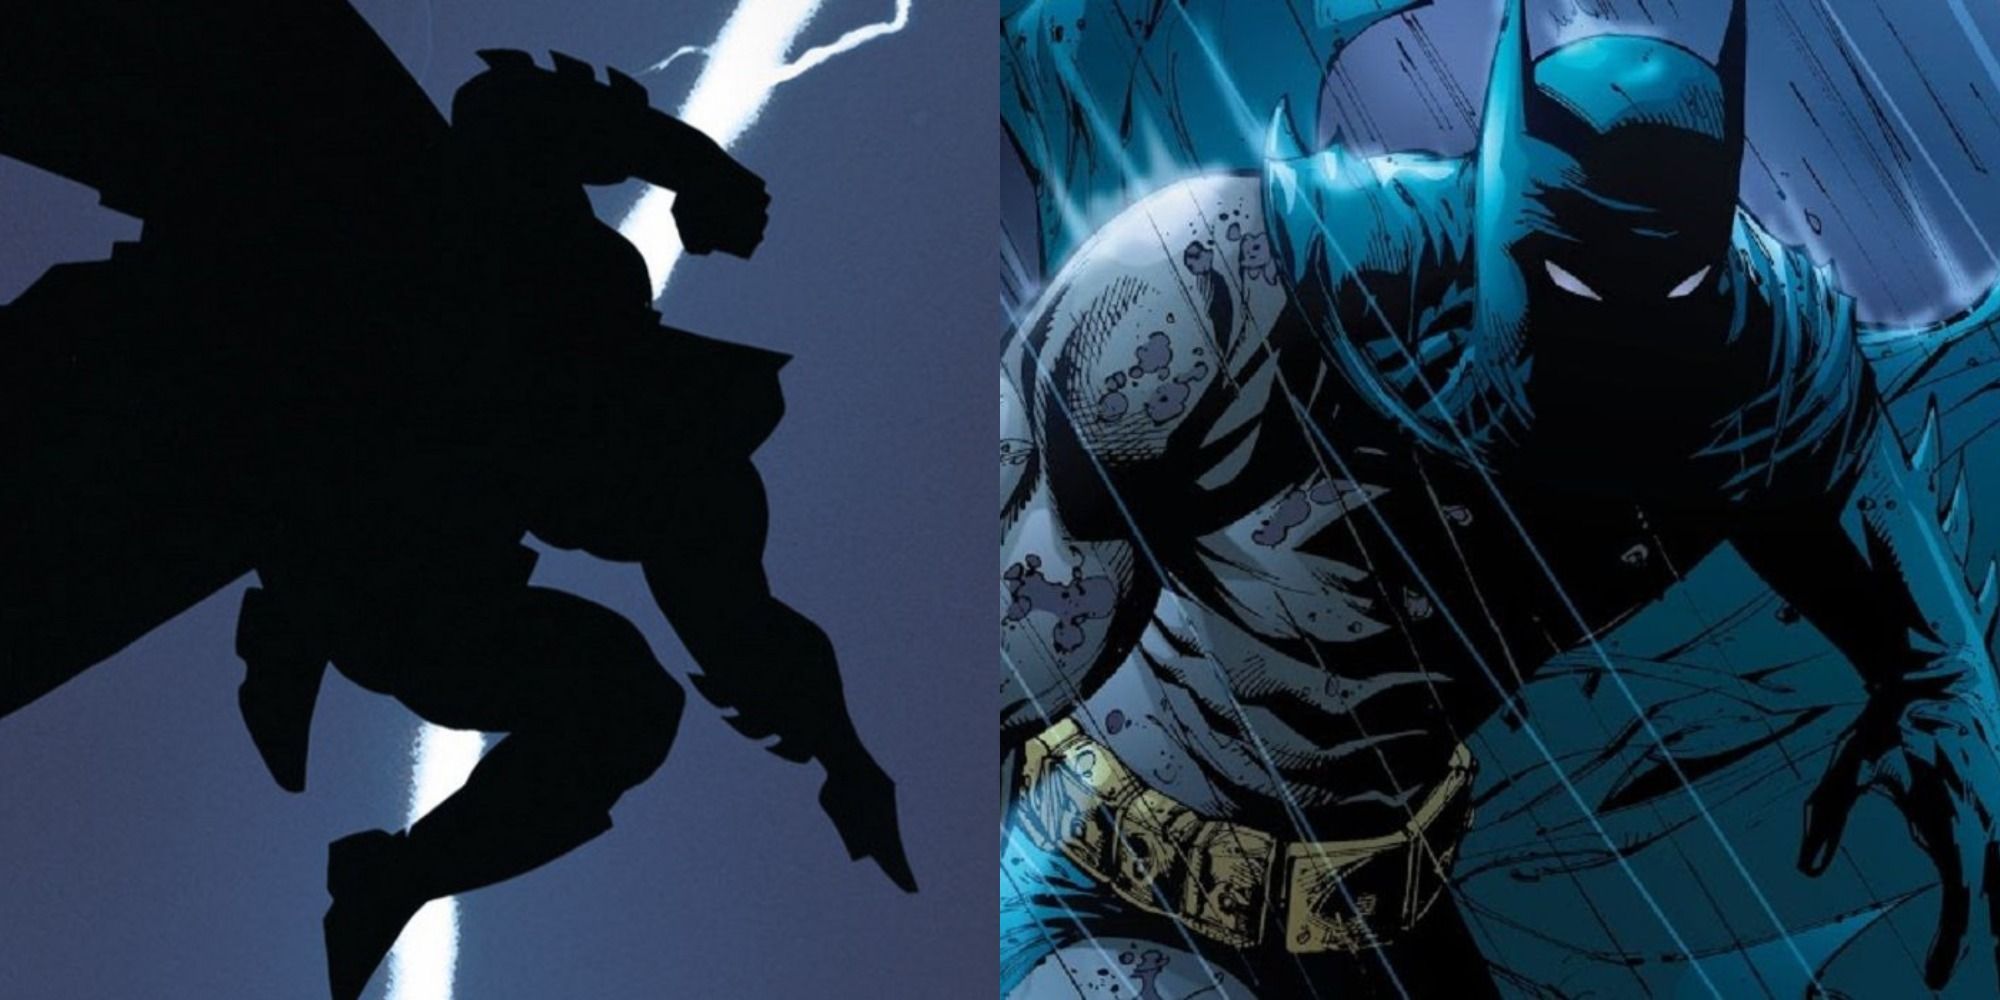 Your favorite Batman comic? : r/batman